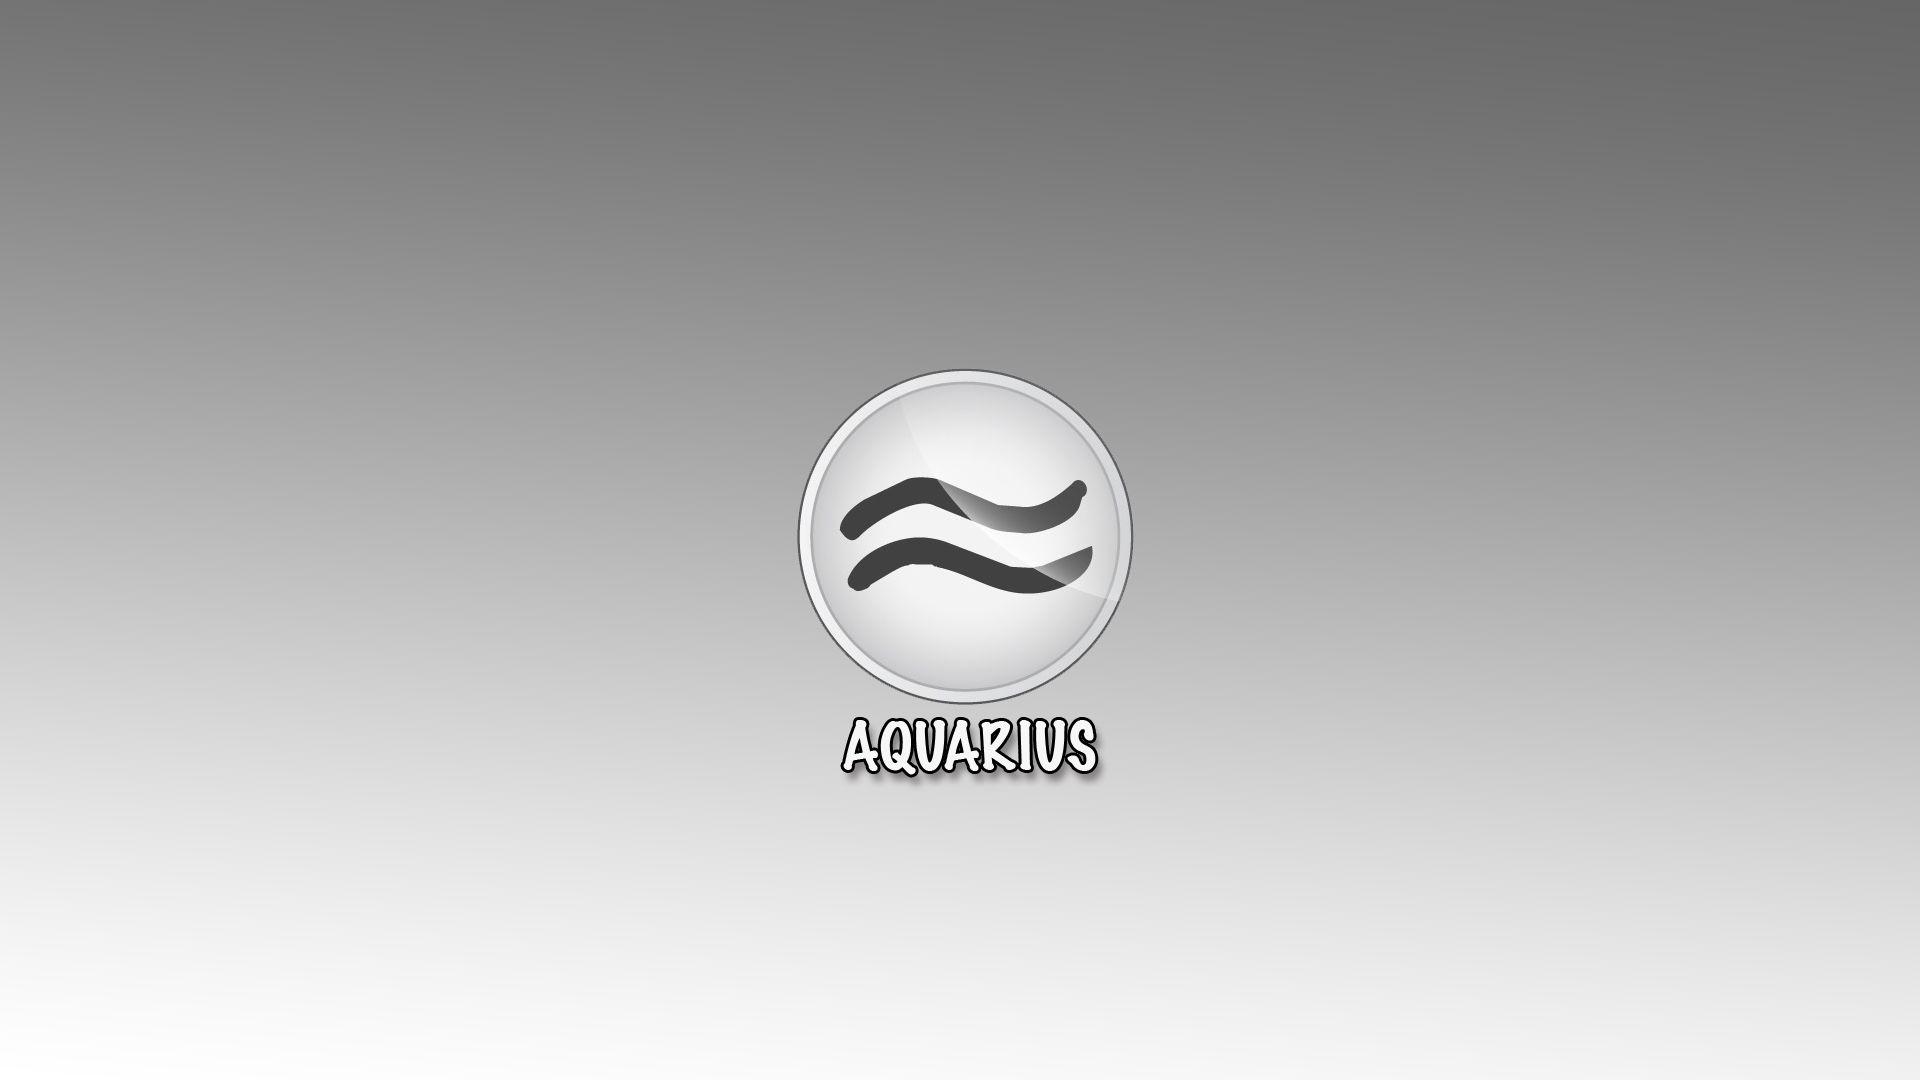 HD Aquarius Wallpaper